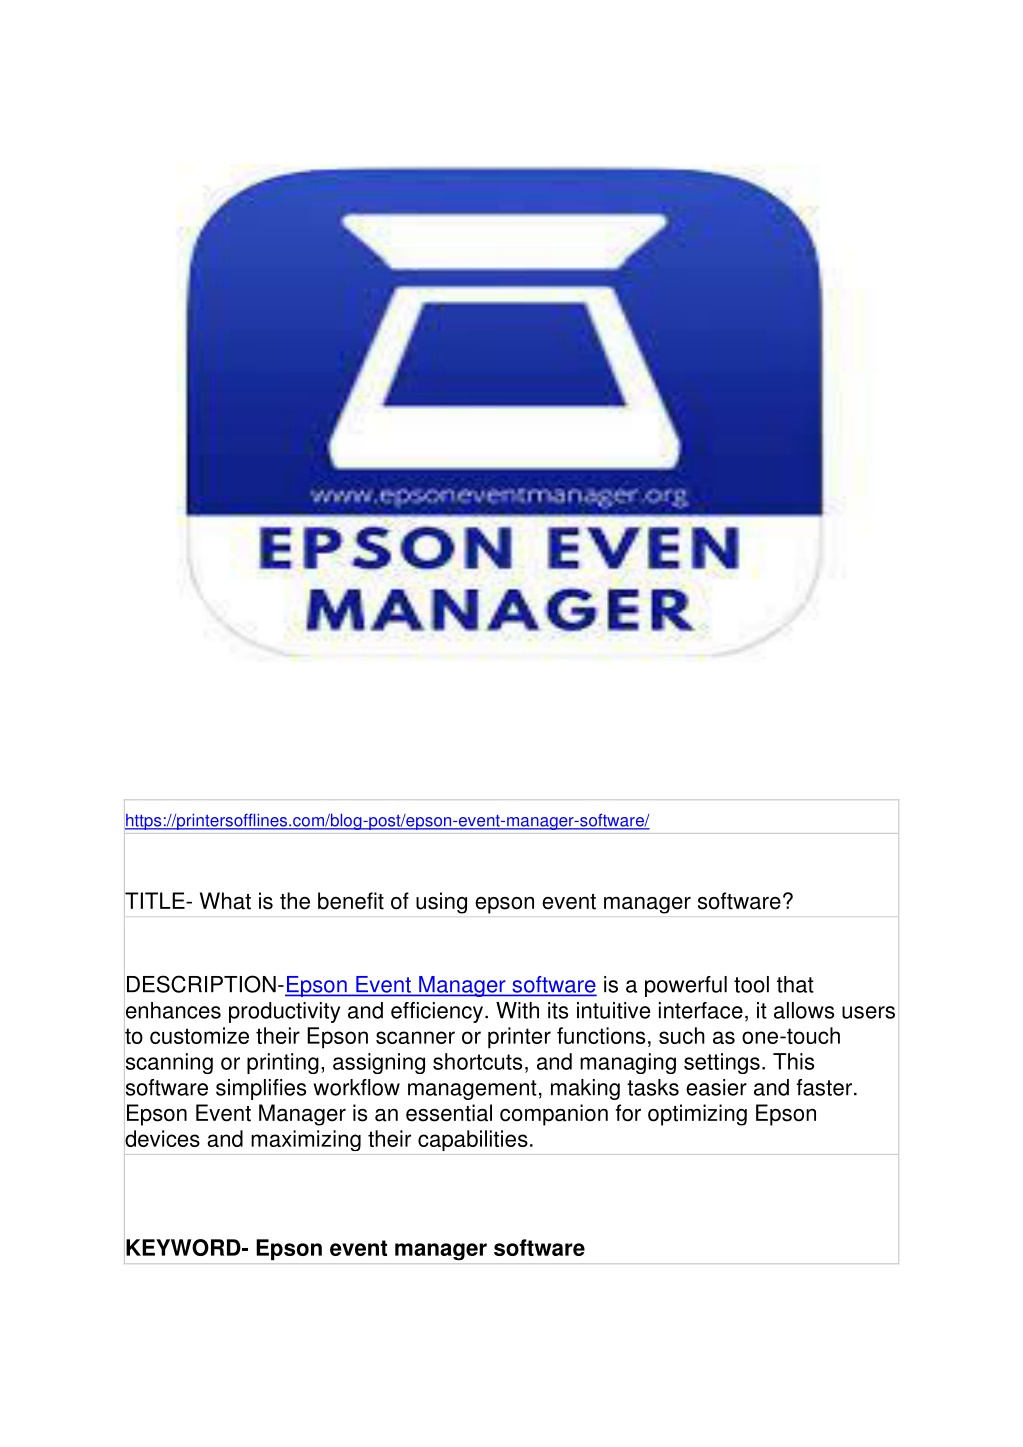 epson wf 2540 software